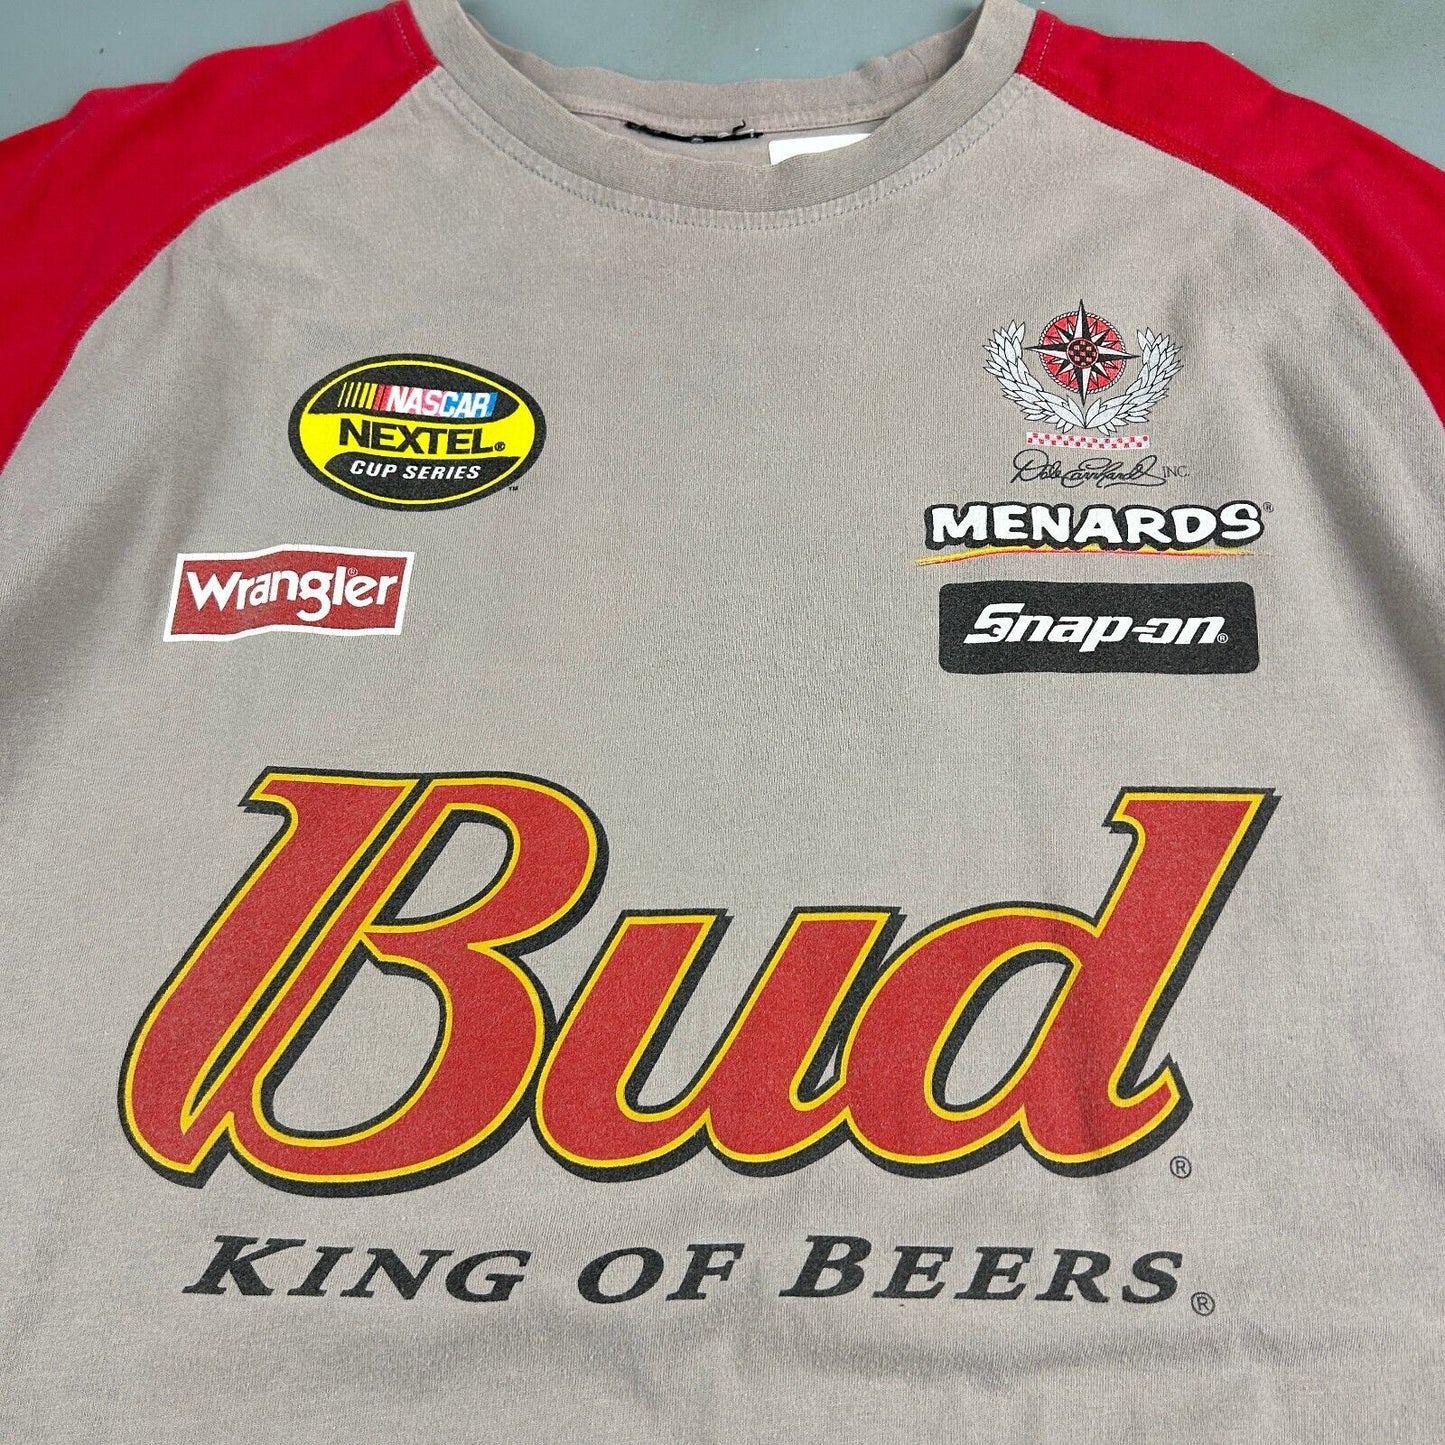 VINTAGE | BUD King Of Beers Sponsors Nascar #8 Two Tone T-Shirt sz XL Men Adult